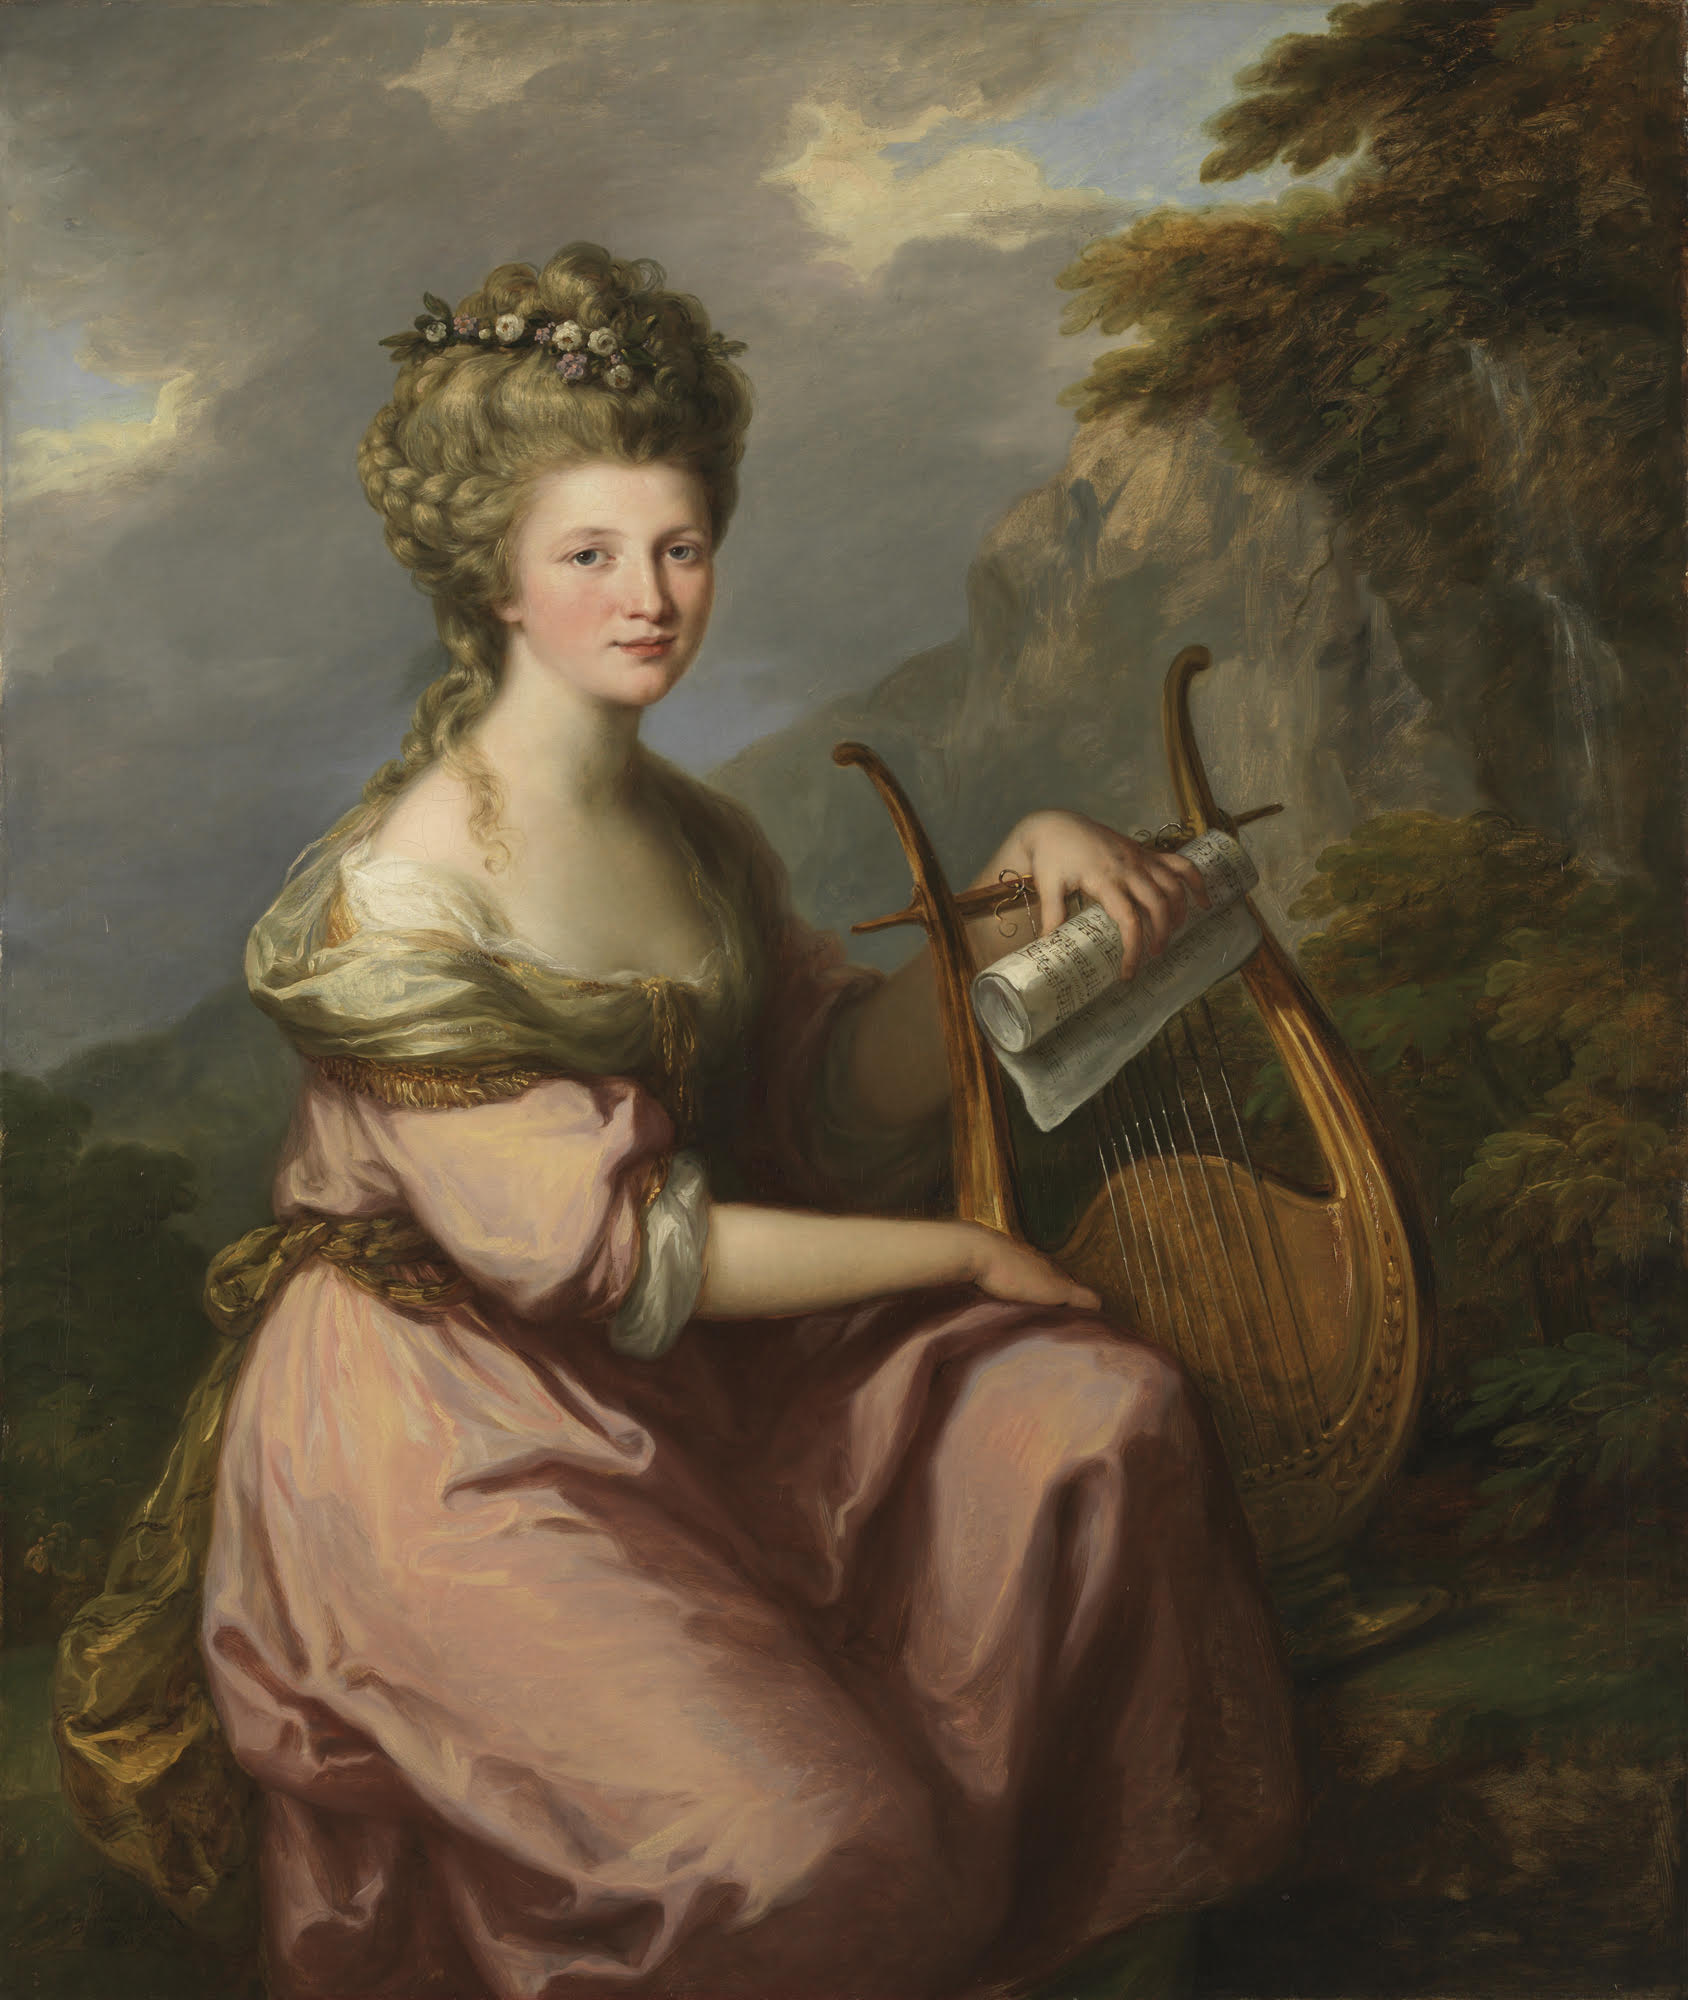 Portrait of Sarah Harrop (Mrs. Bates) as a Muse by Angelica Kauffman - ca. 1780 - 1781 Princeton University Art Museum